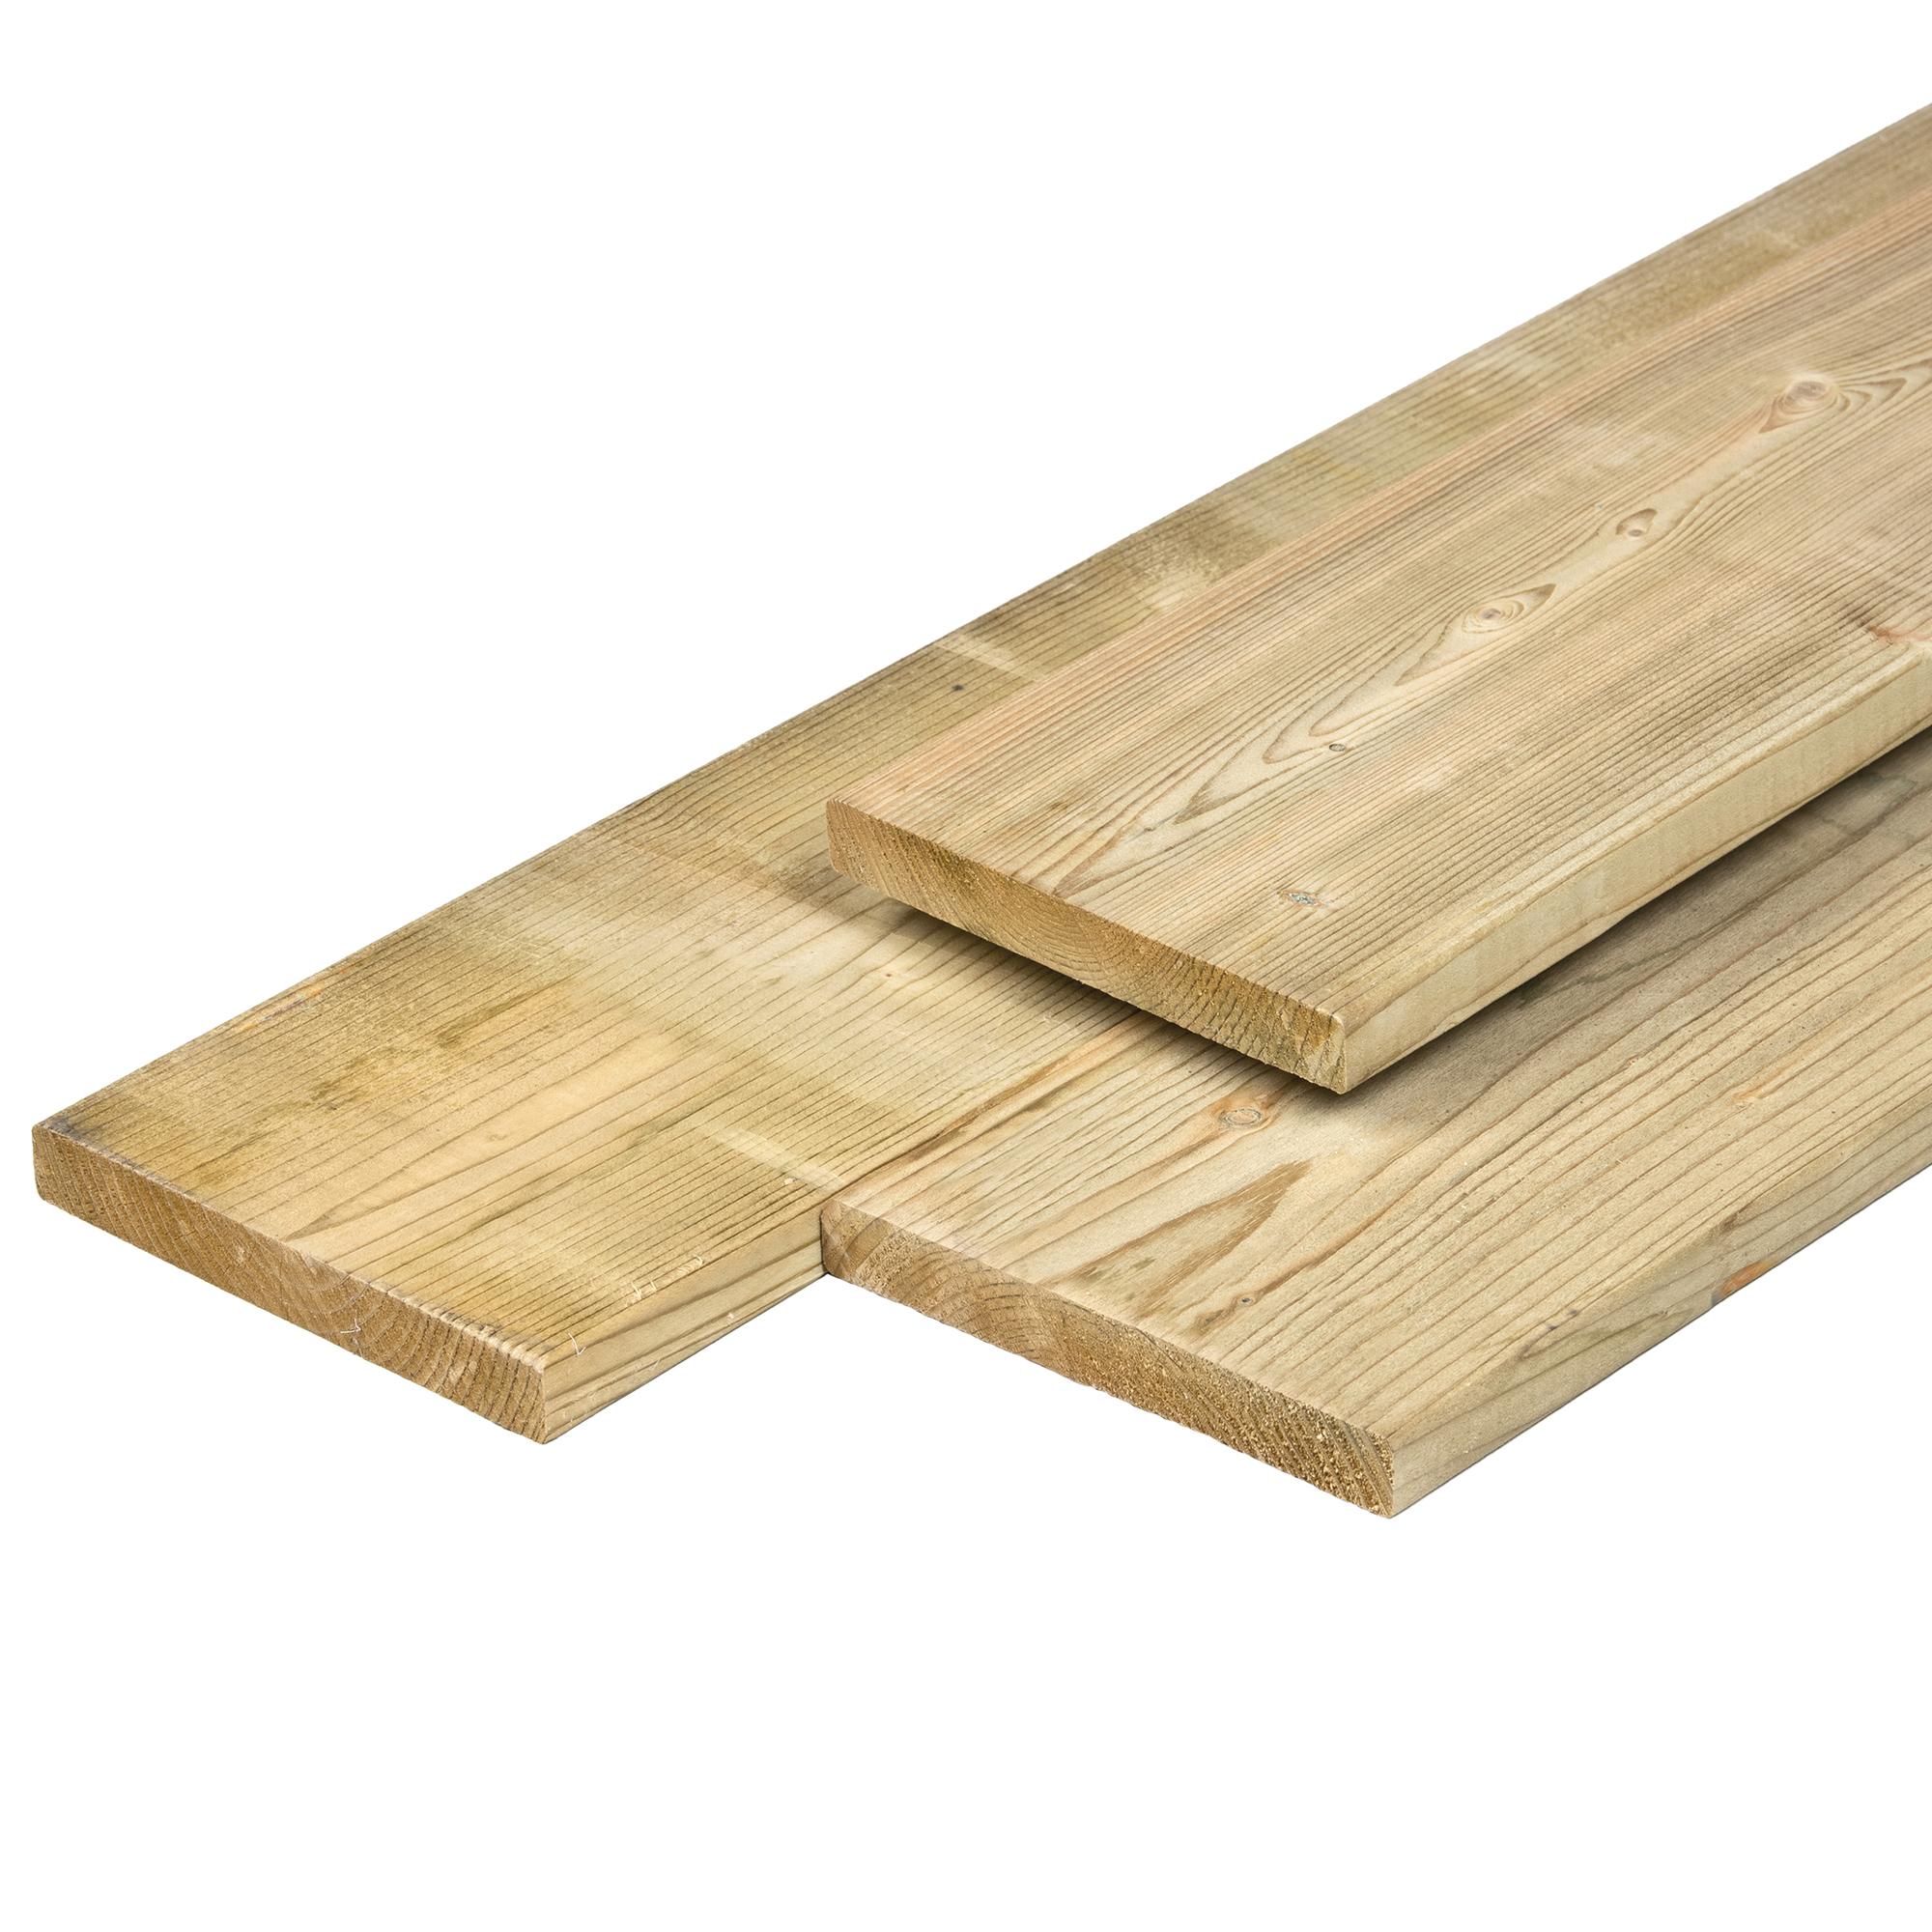 Plank NE vuren 1.8x14.5x300cm